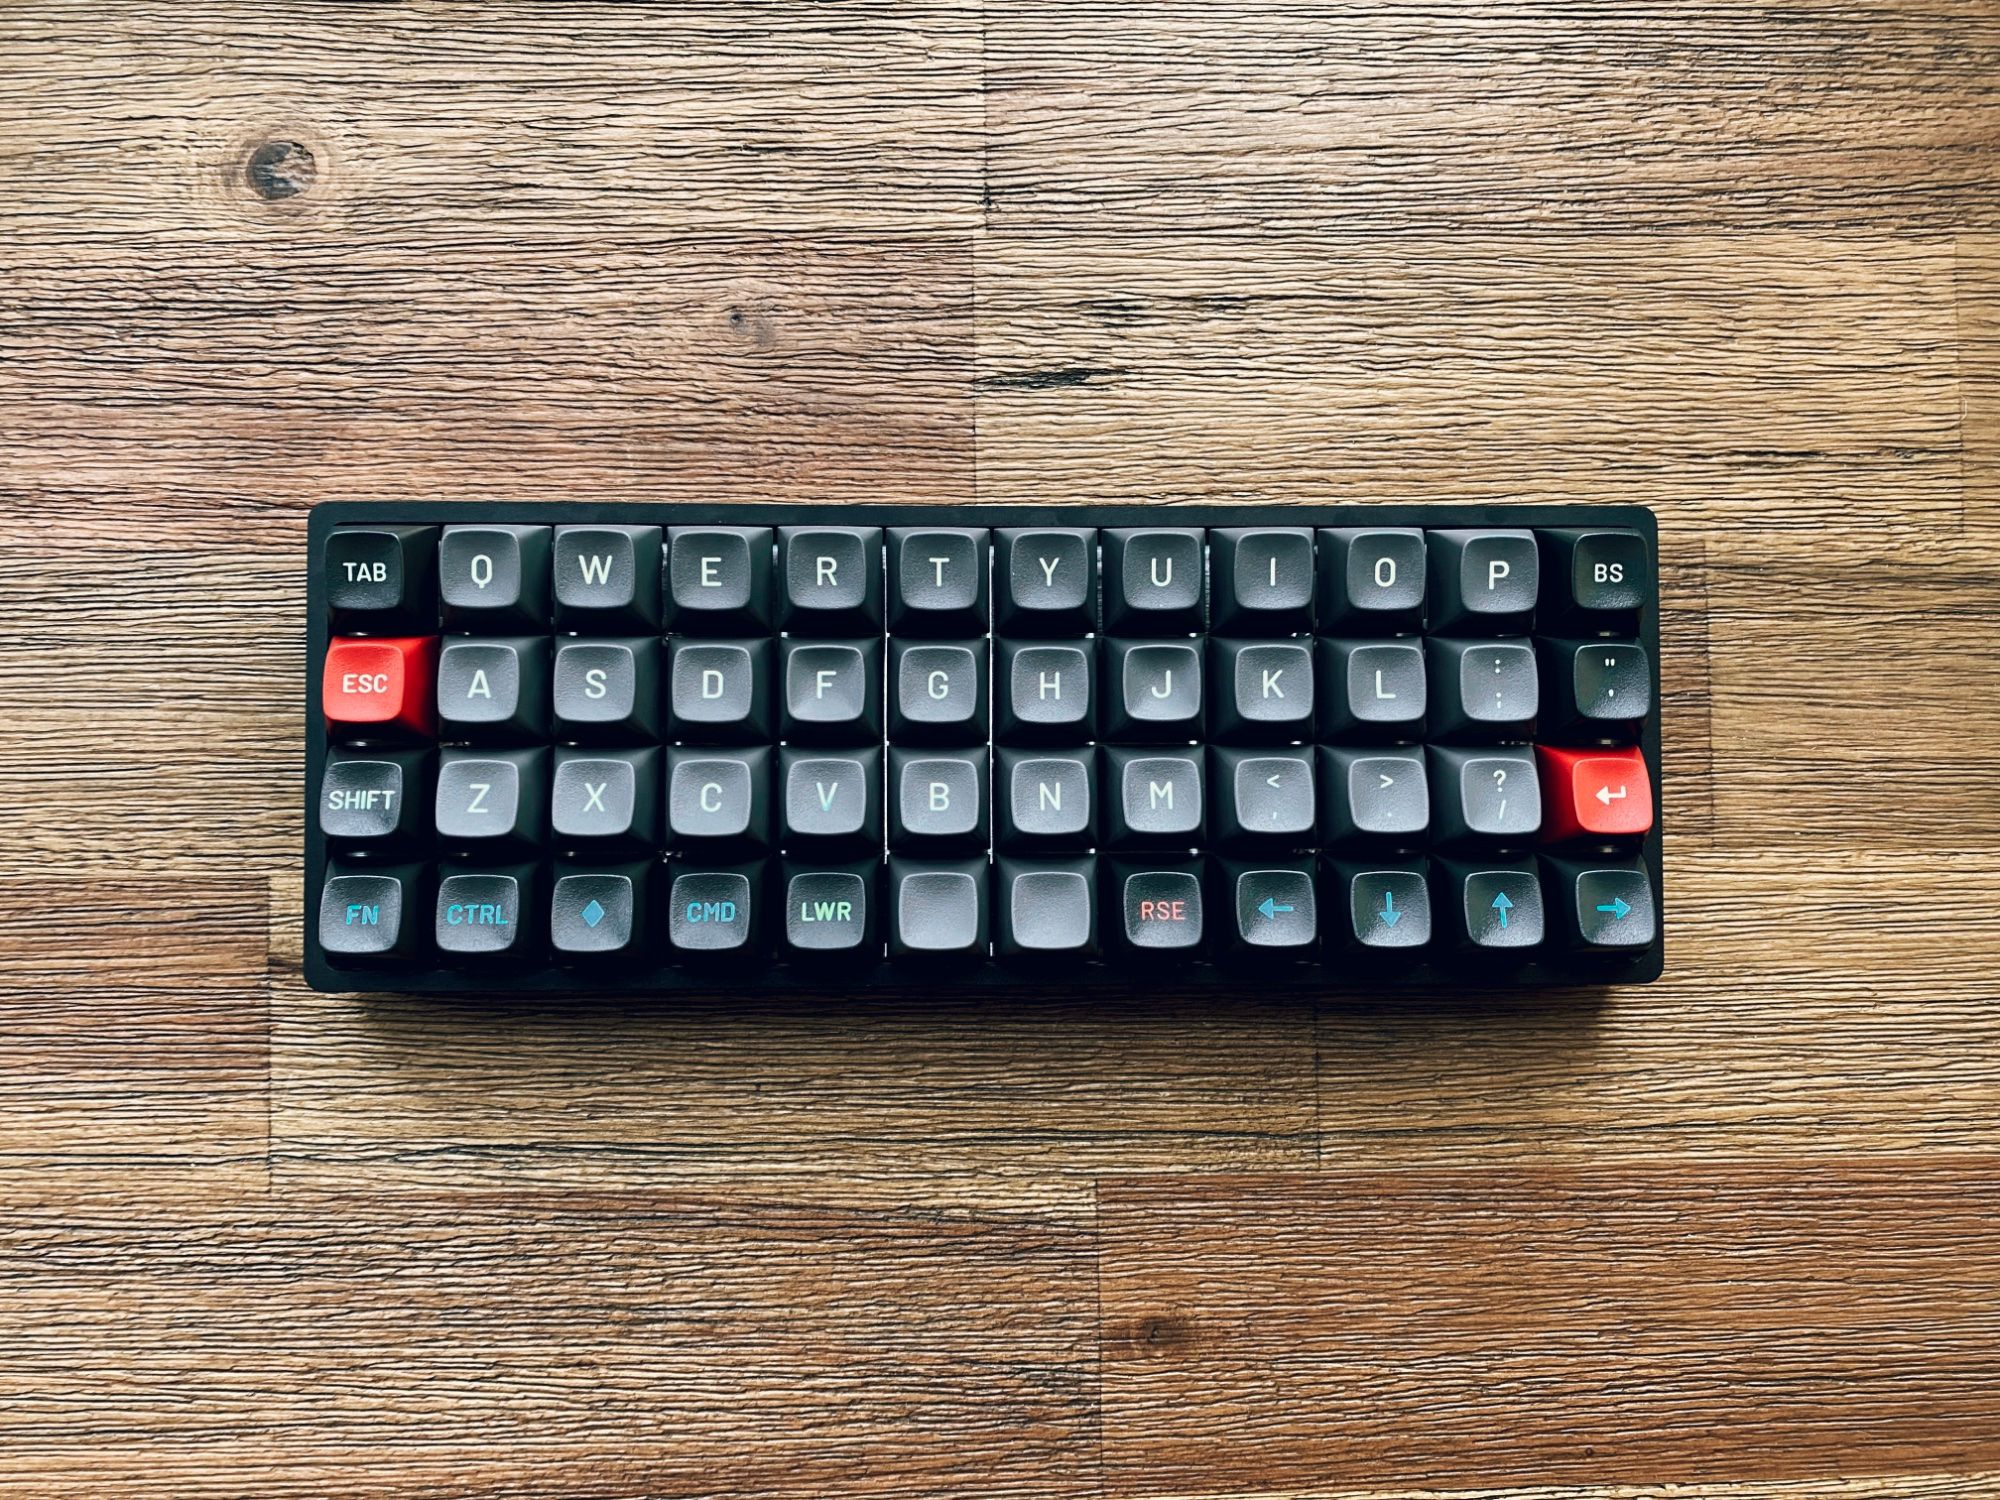 Planck Keyboard with Susuwatari keycaps